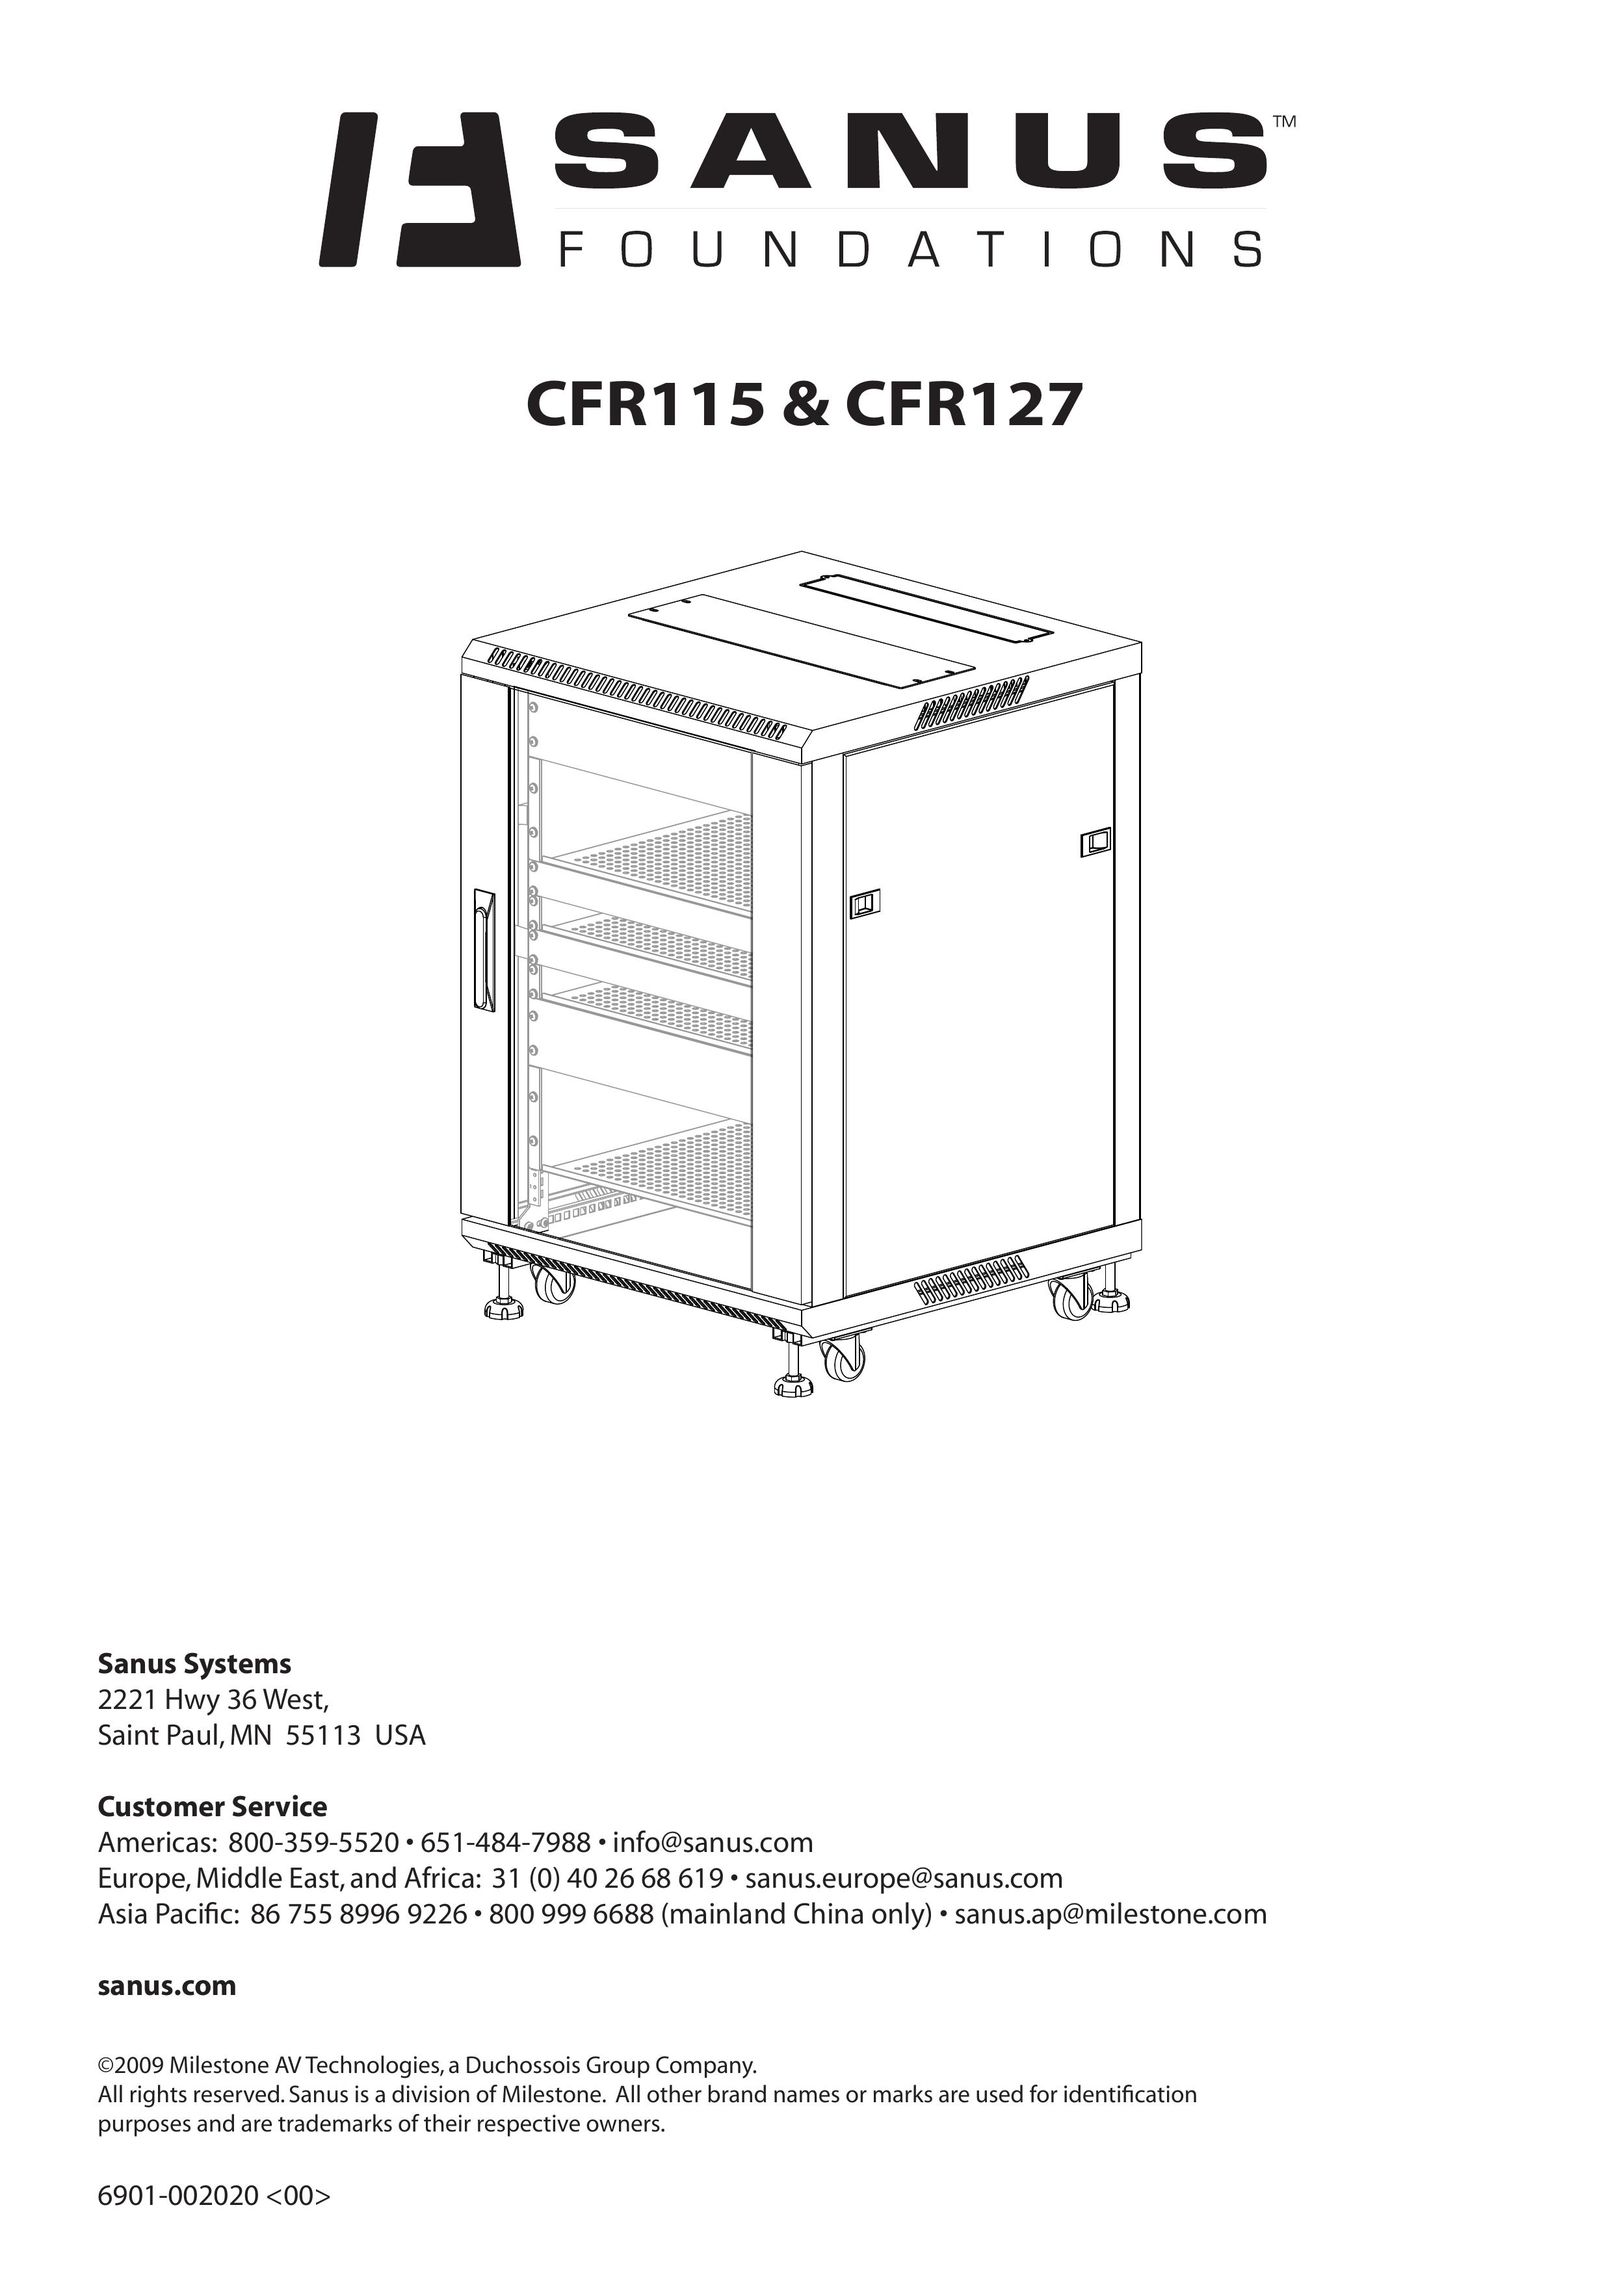 Sanus Systems CFR127 Indoor Furnishings User Manual